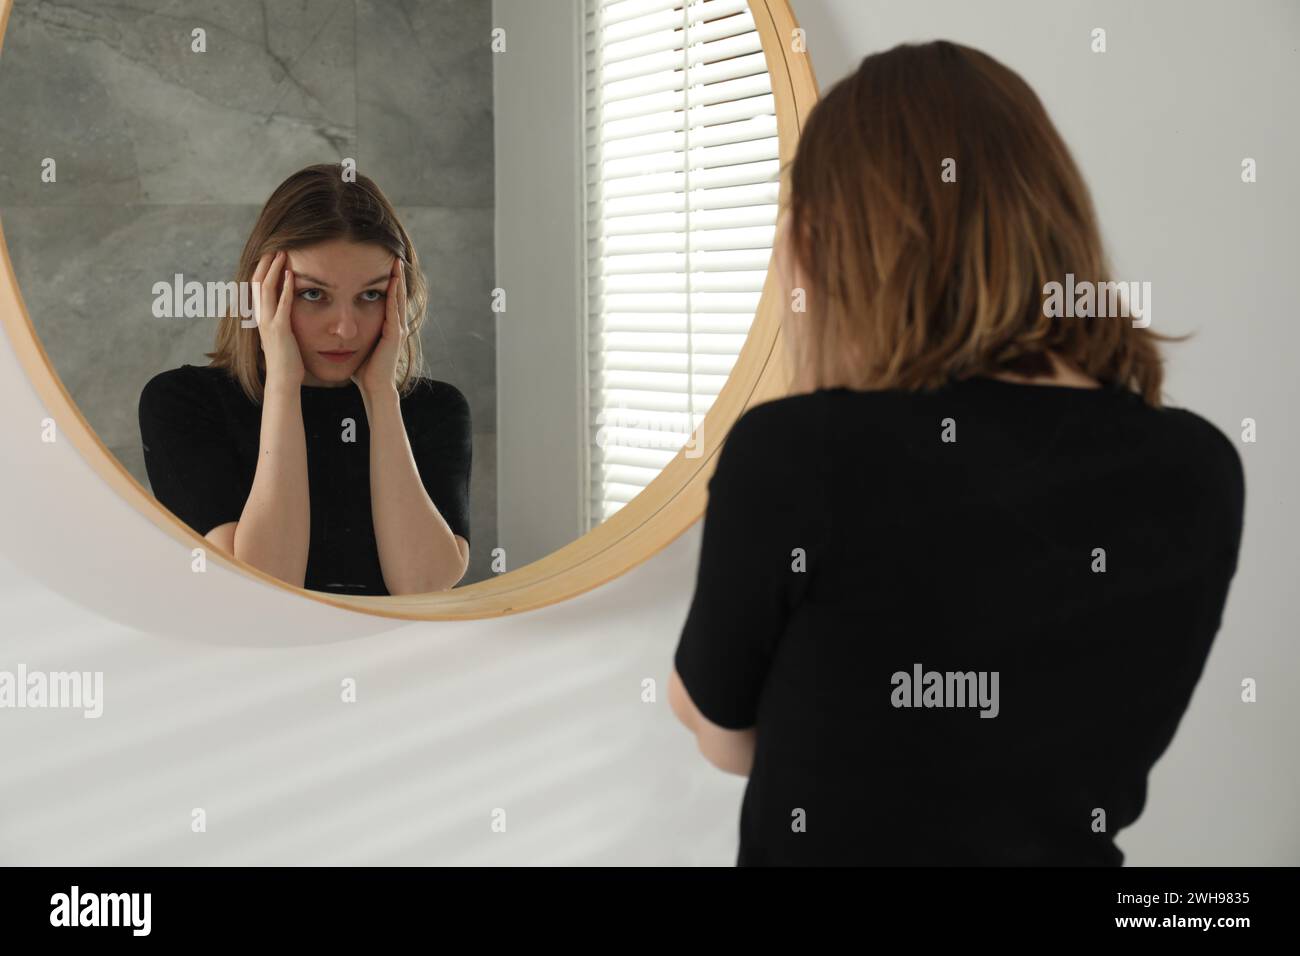 Sad young woman near mirror in room Stock Photo